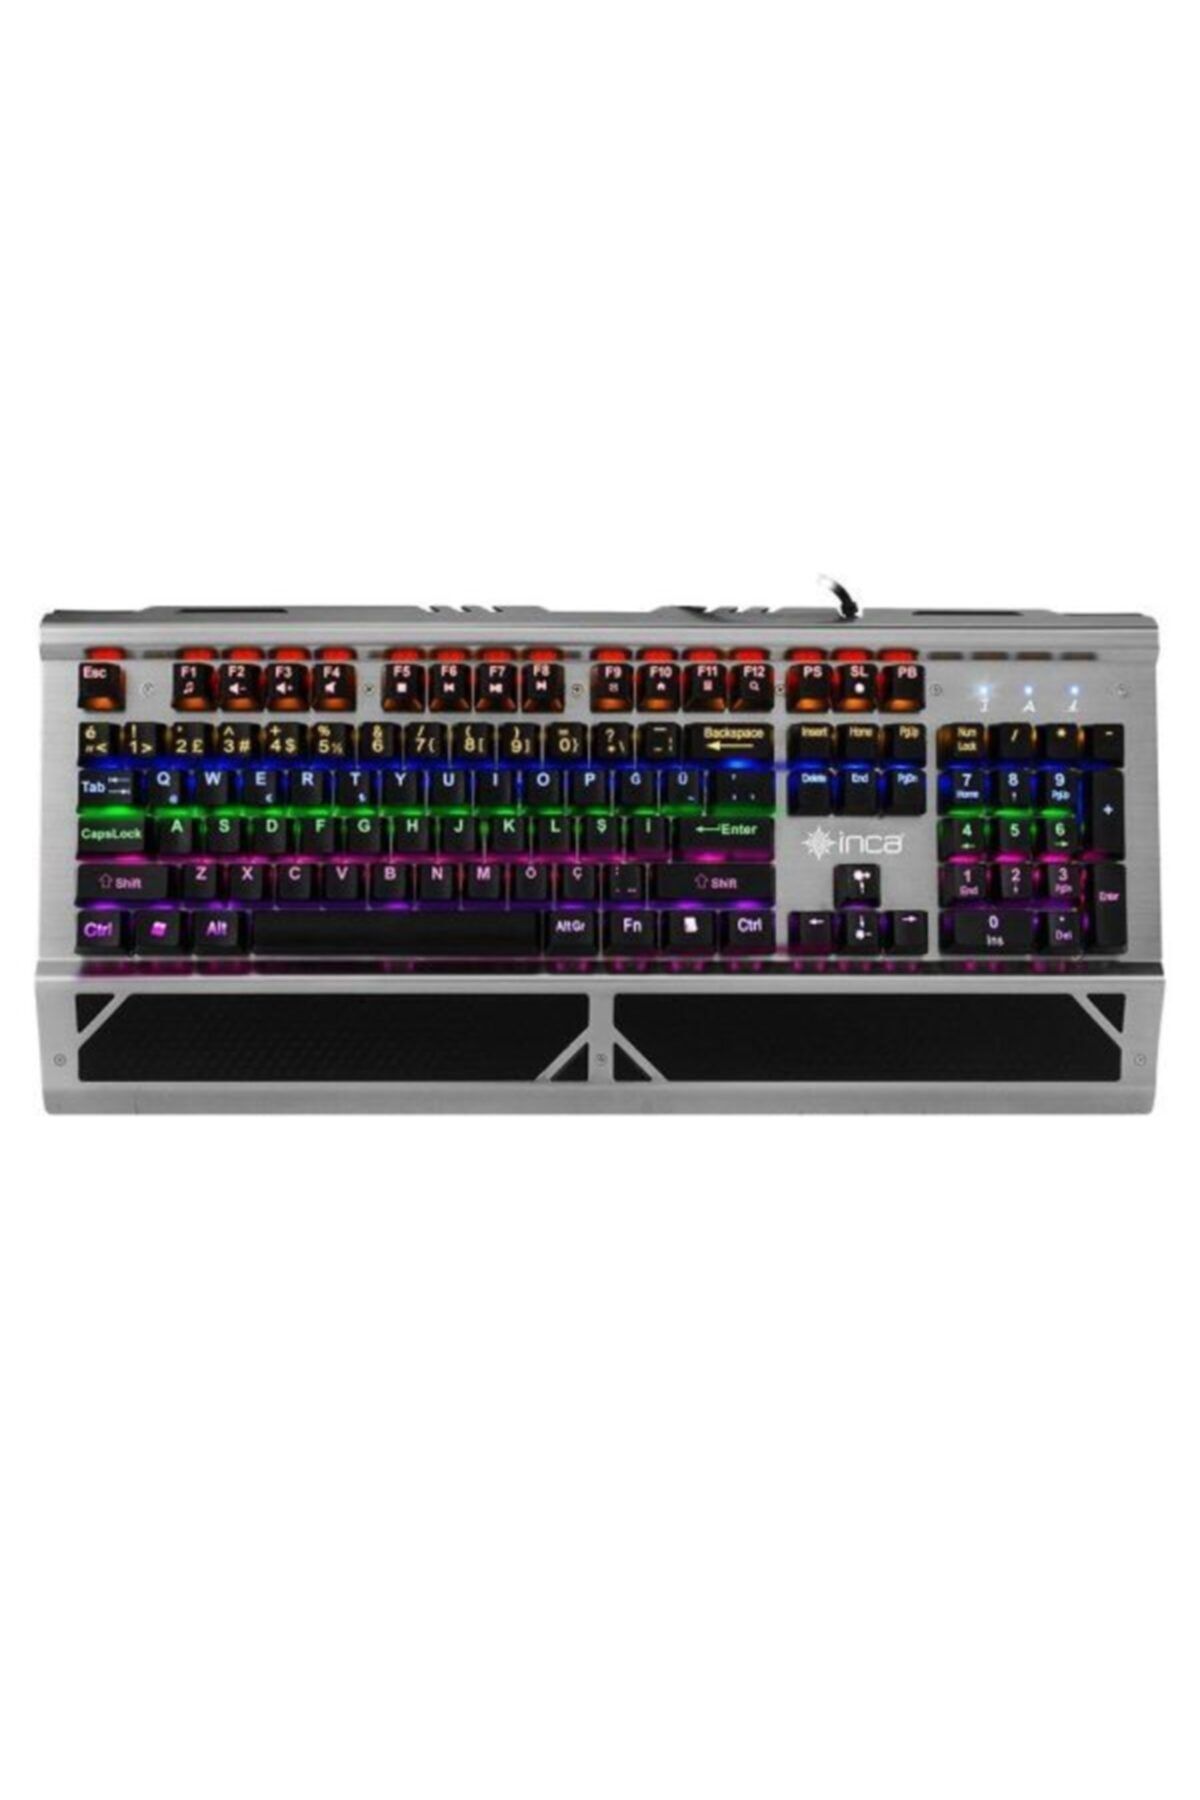 Inca Ikg-440 Ophira Rgb Mekanik Gamıng Keyboard Klavye